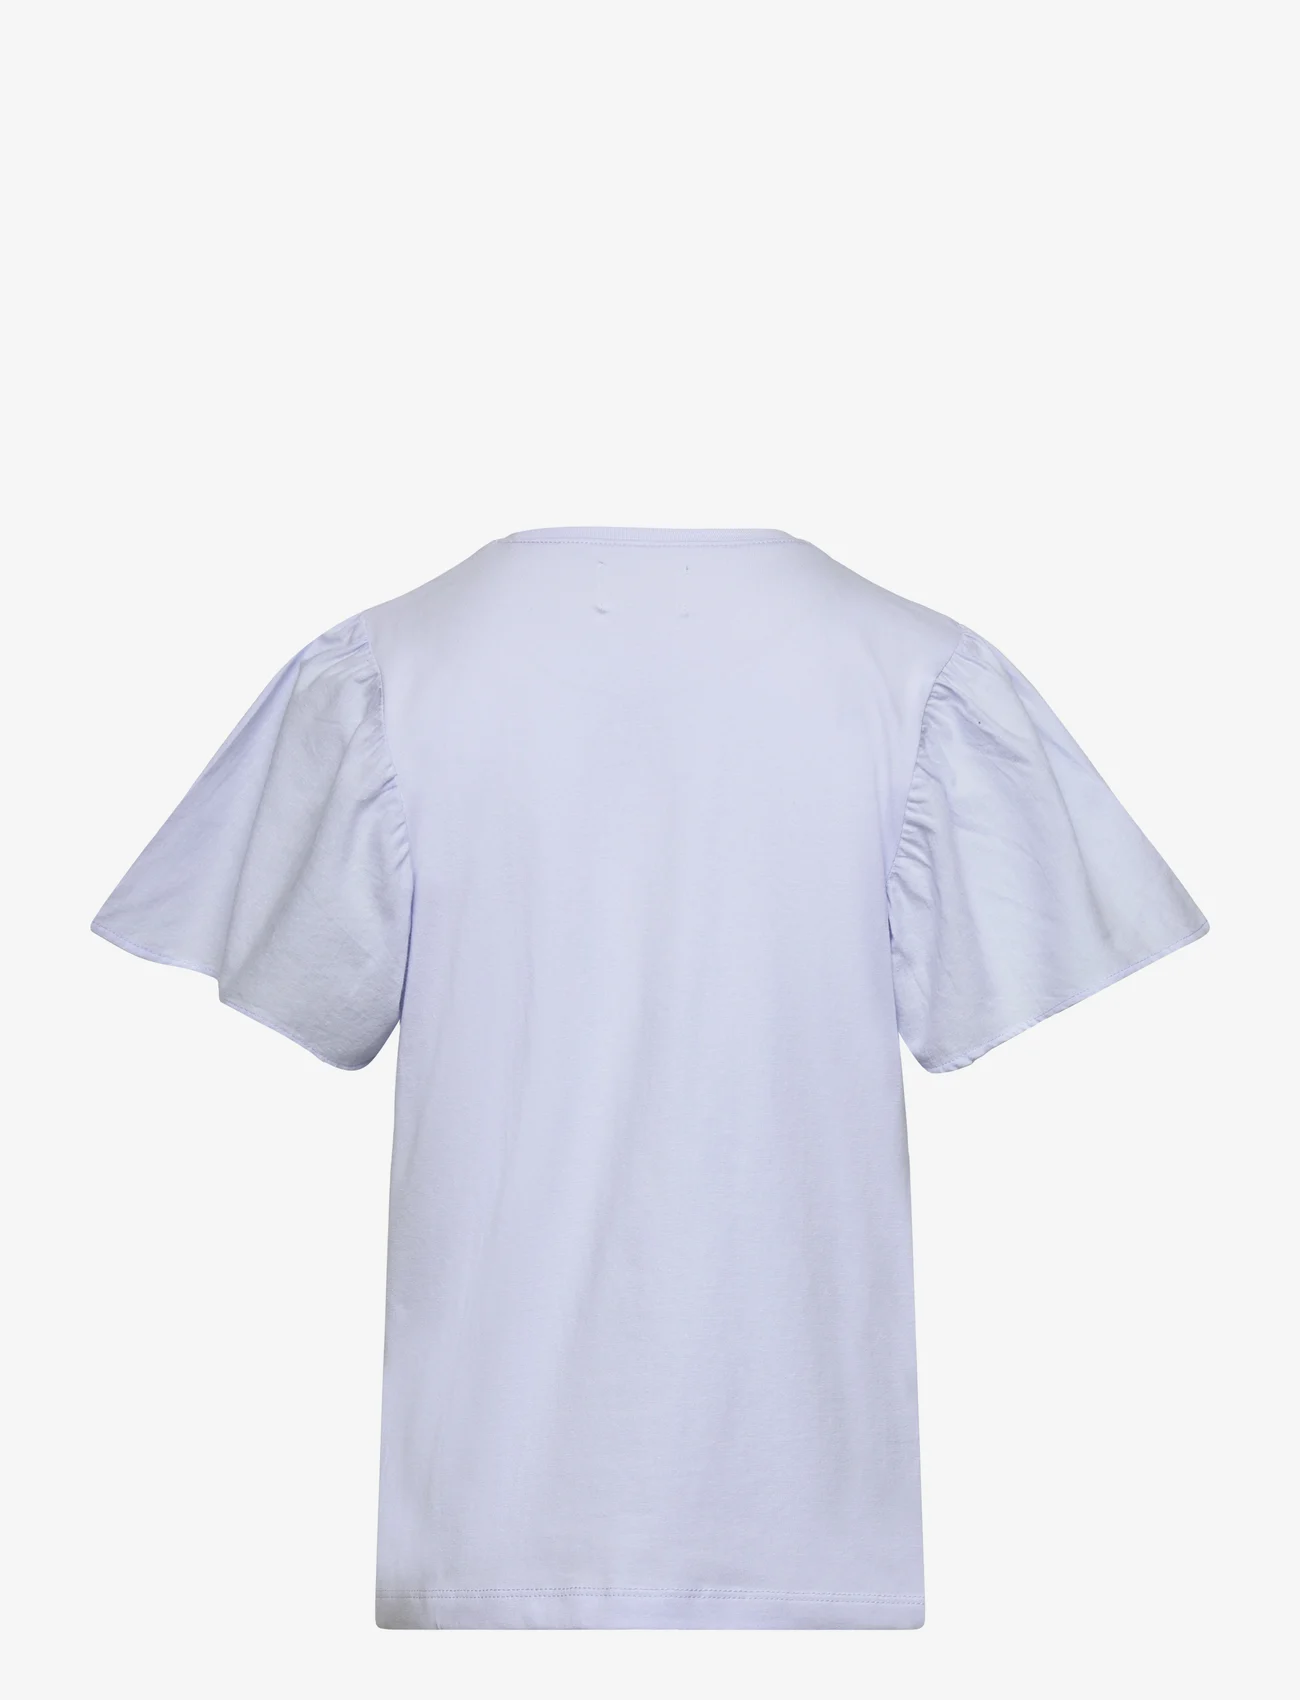 Creamie - T-shirt SS Woven - short-sleeved - xenon blue - 1